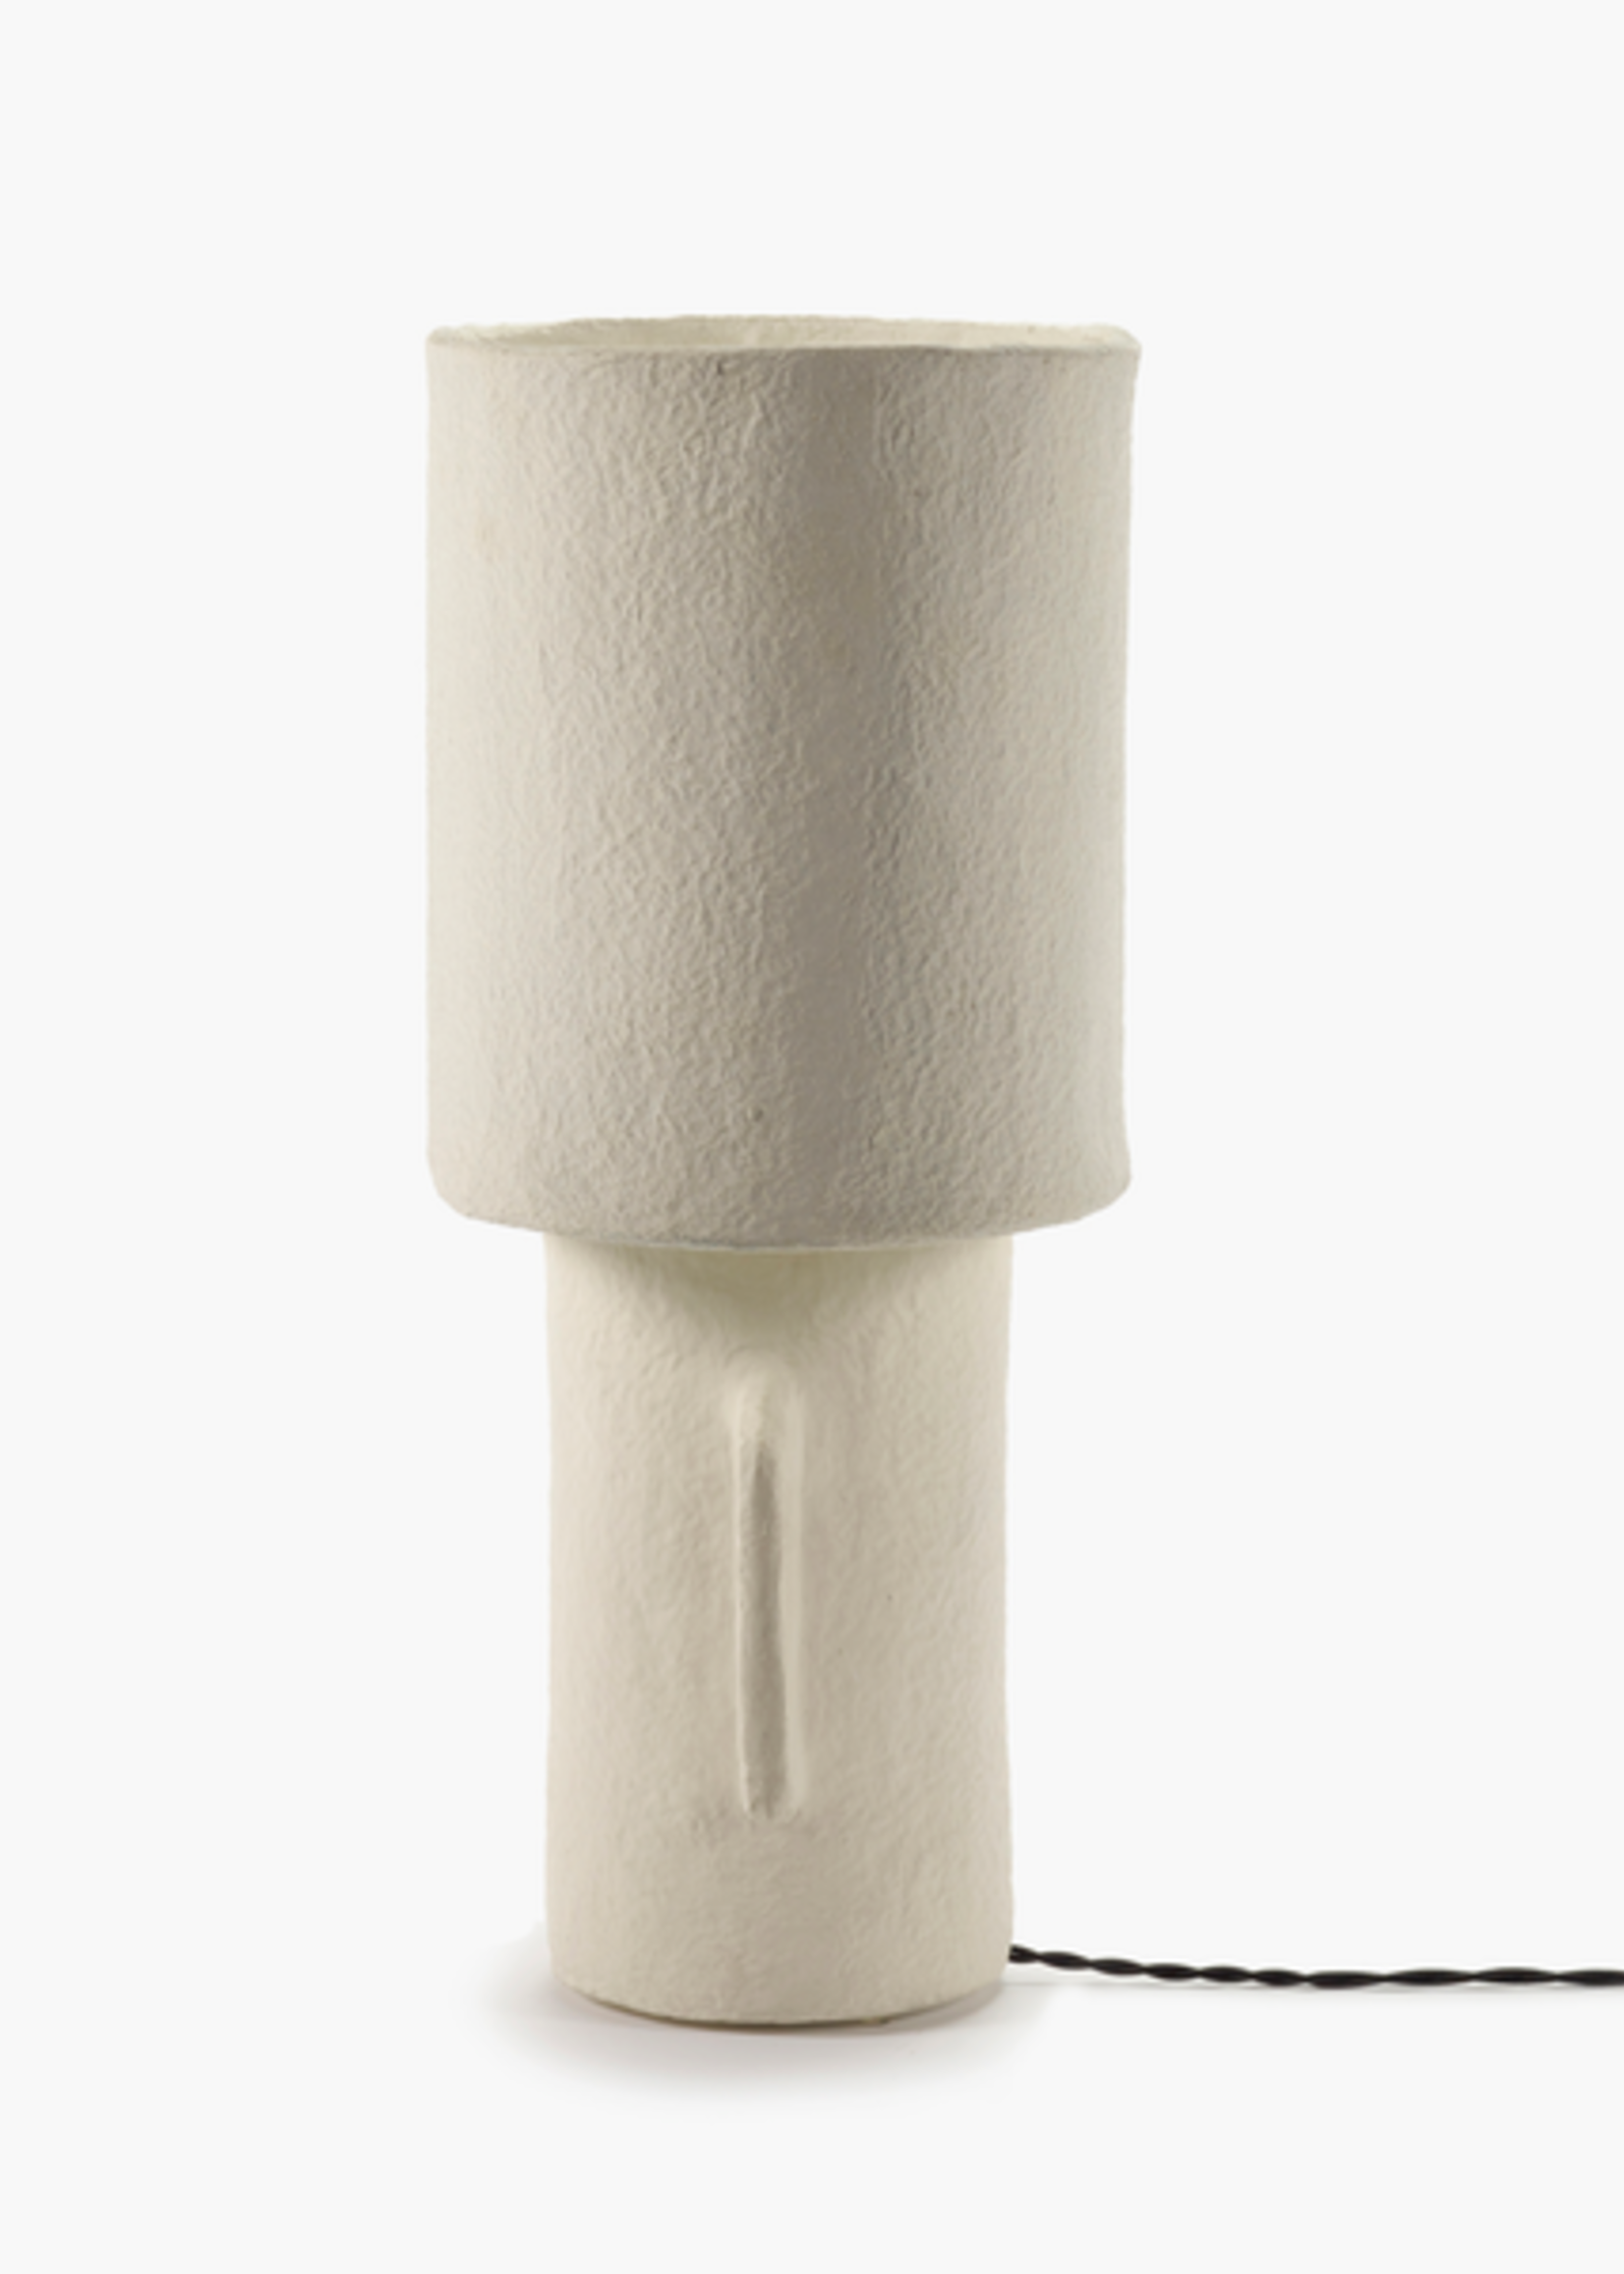 Serax Serax - Marie Michielssen - Earth - Lampe à poser - M - H 54cm - blanc - papier mâché